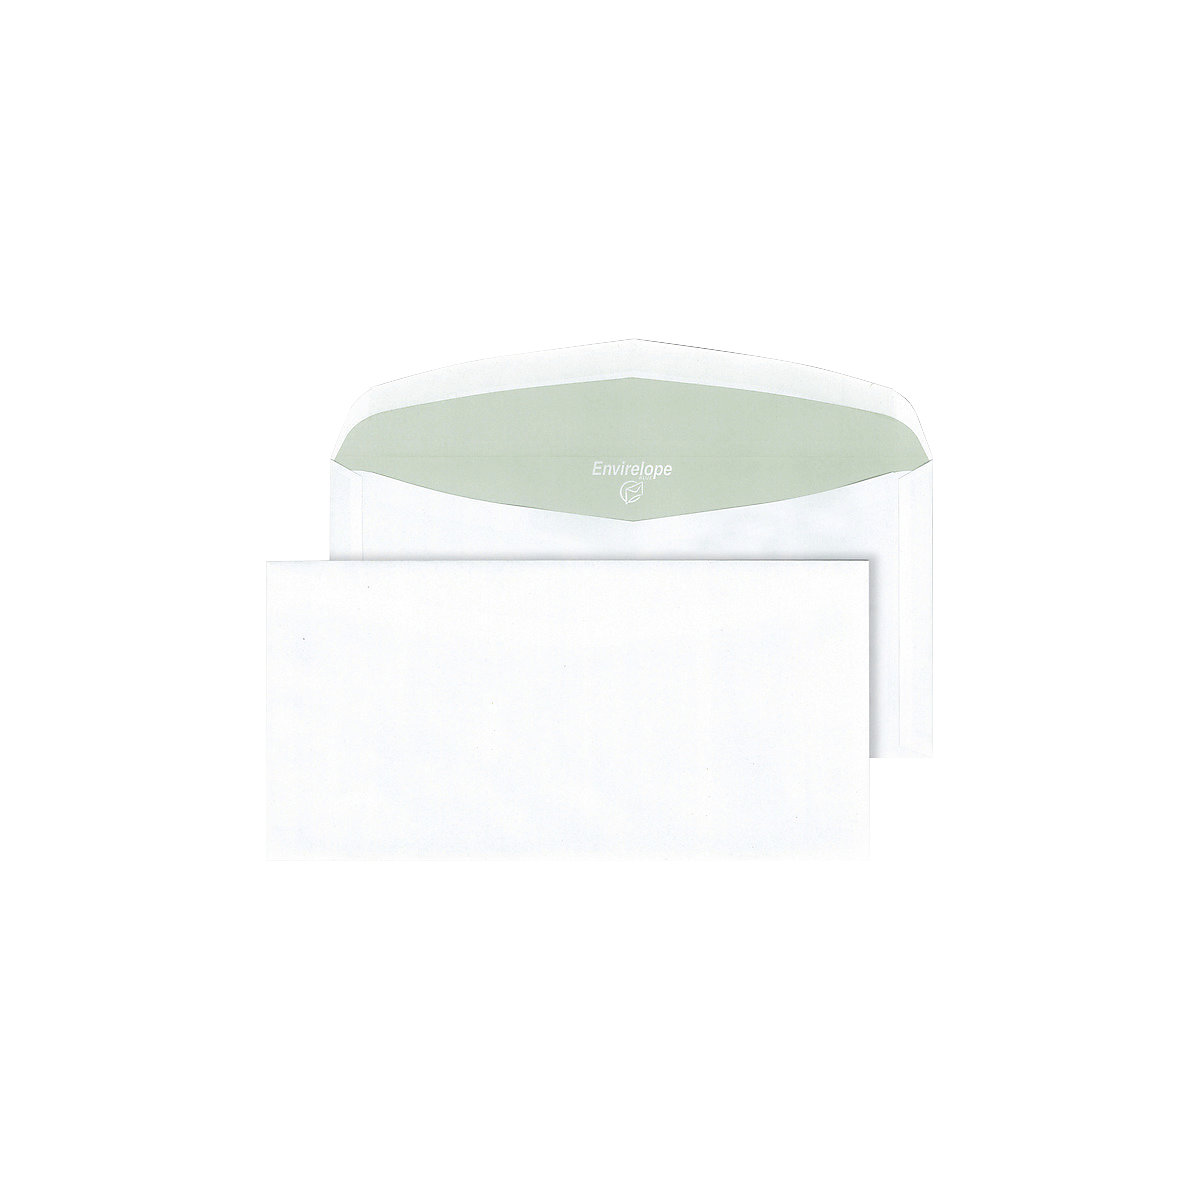 Enveloppes Envirelope® – terra, blanc, format C6 / C5, lot de 1000-2